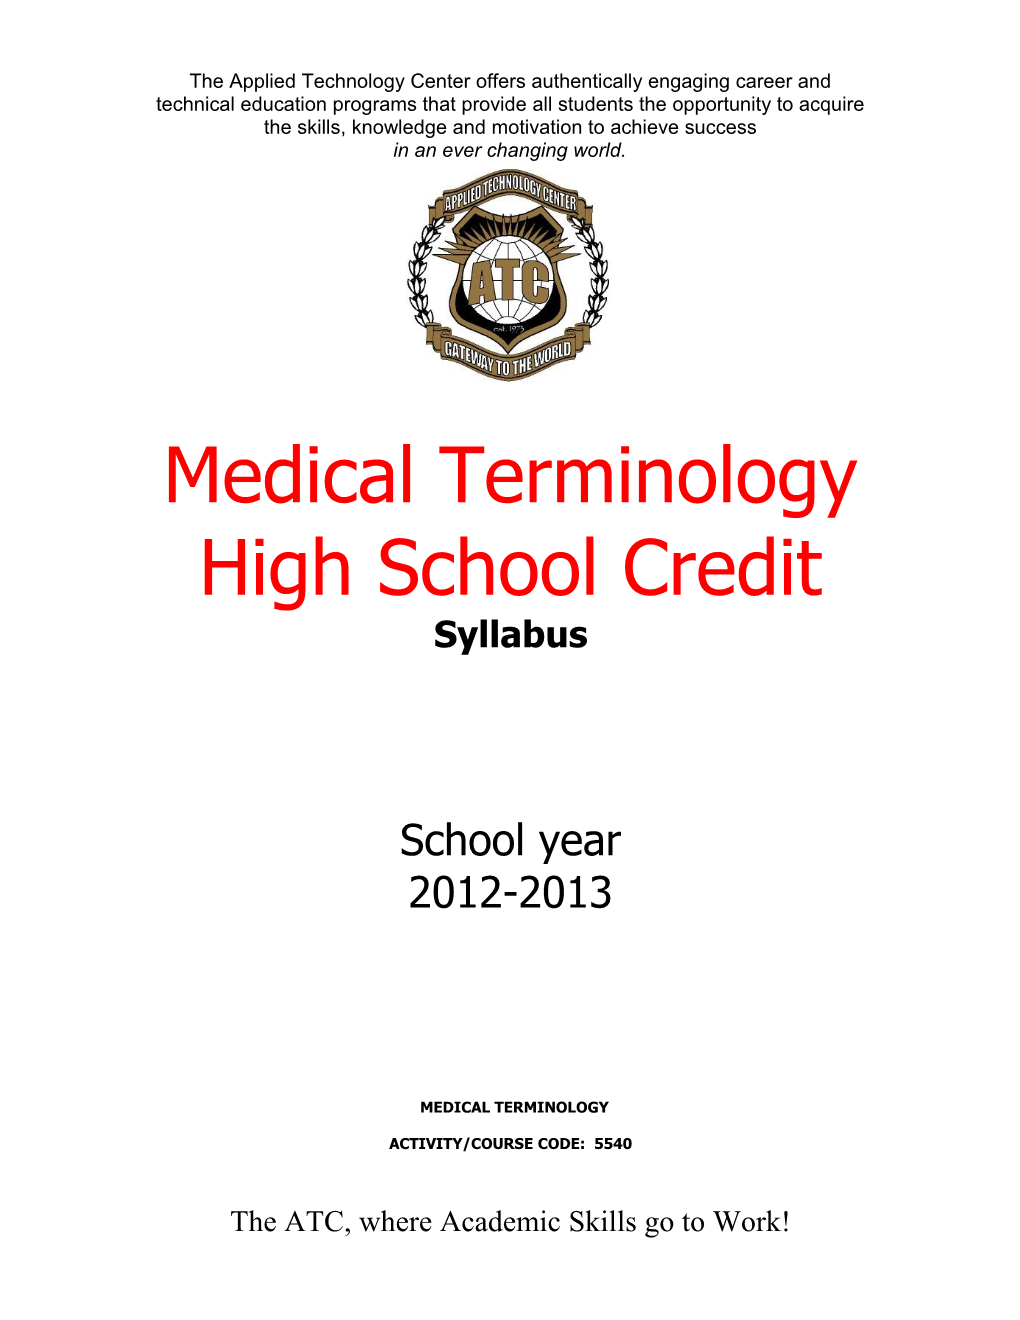 Medical Terminology High School Credit